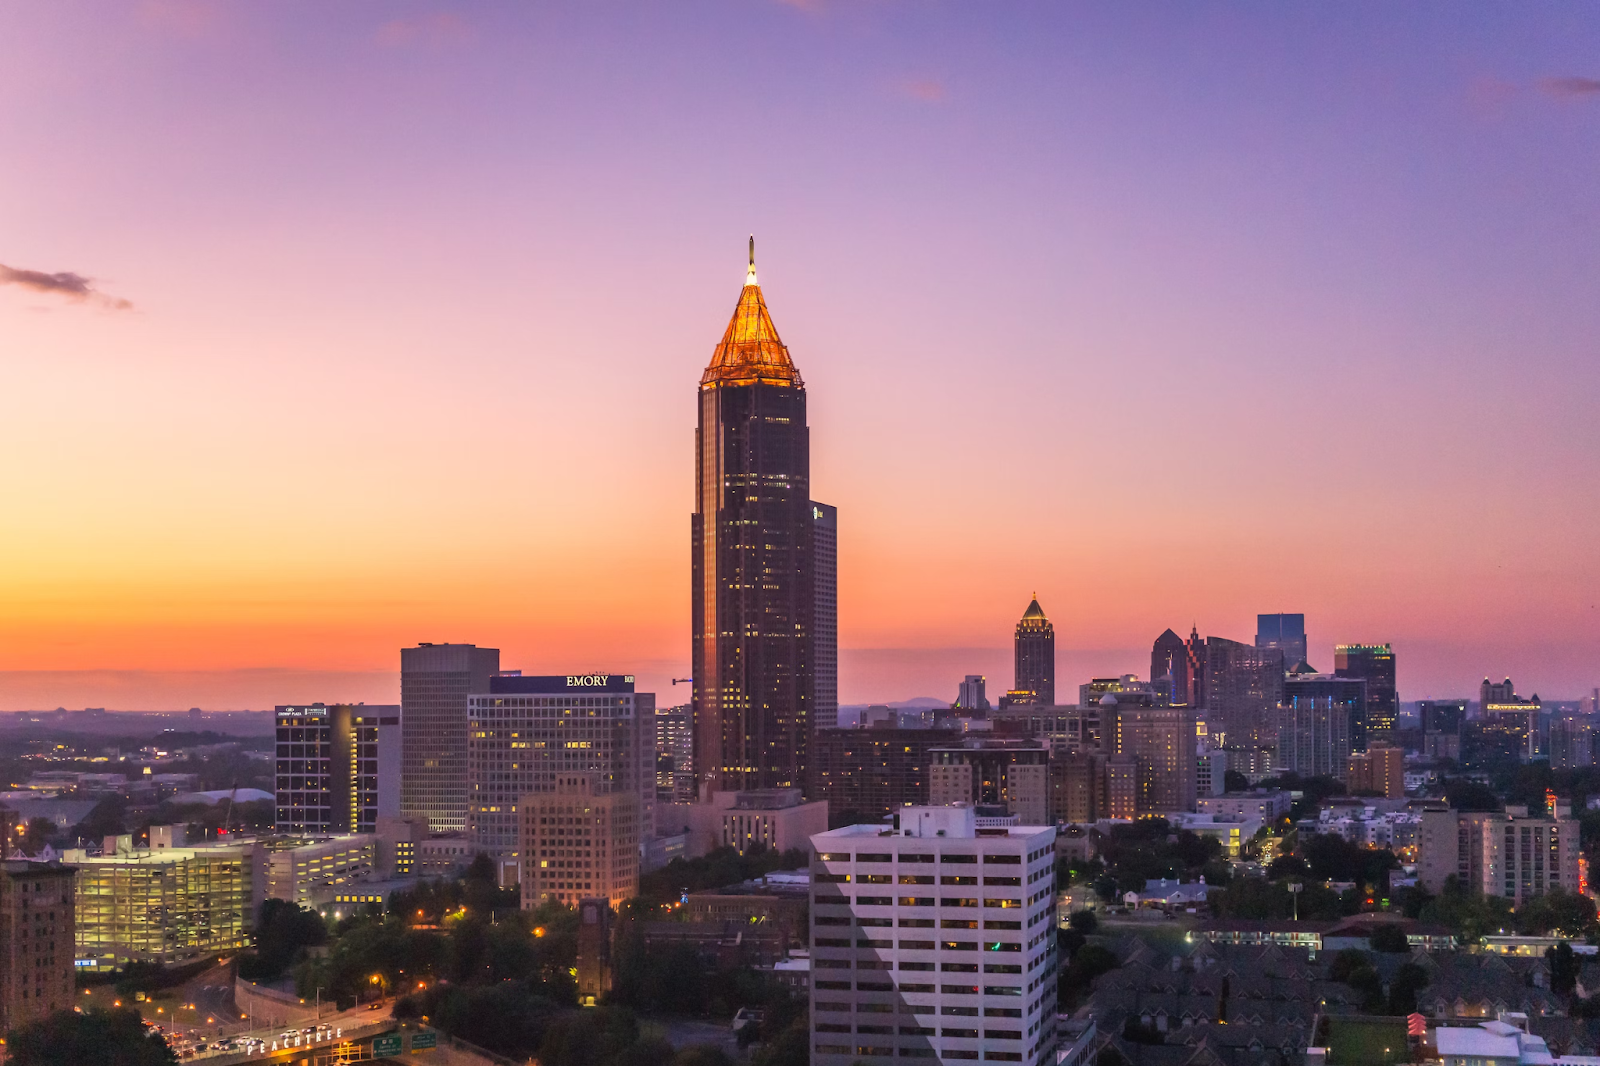 Skyline of Atlanta just after sunset.
